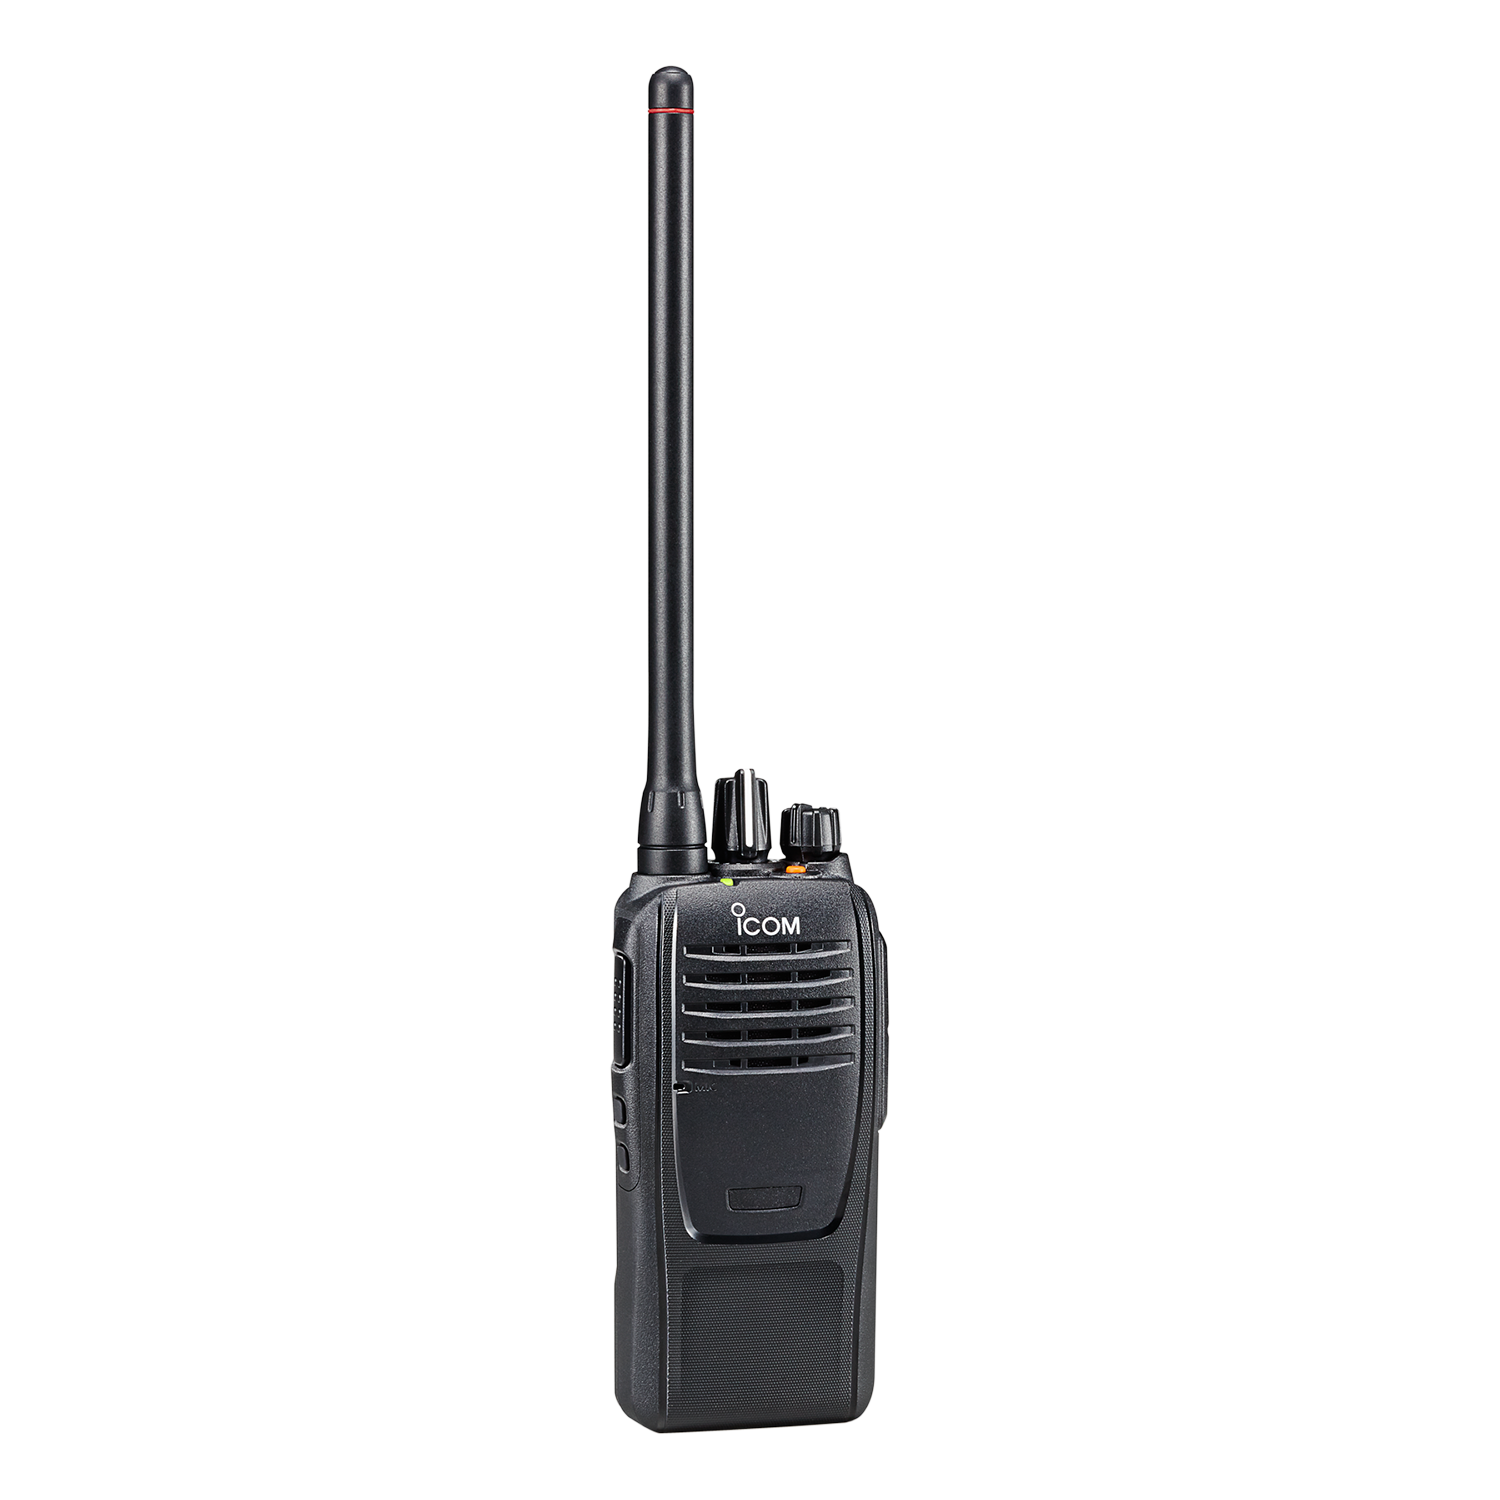 ICOM IC-F2100D jednopasmowy radiotelefon profesjonalny